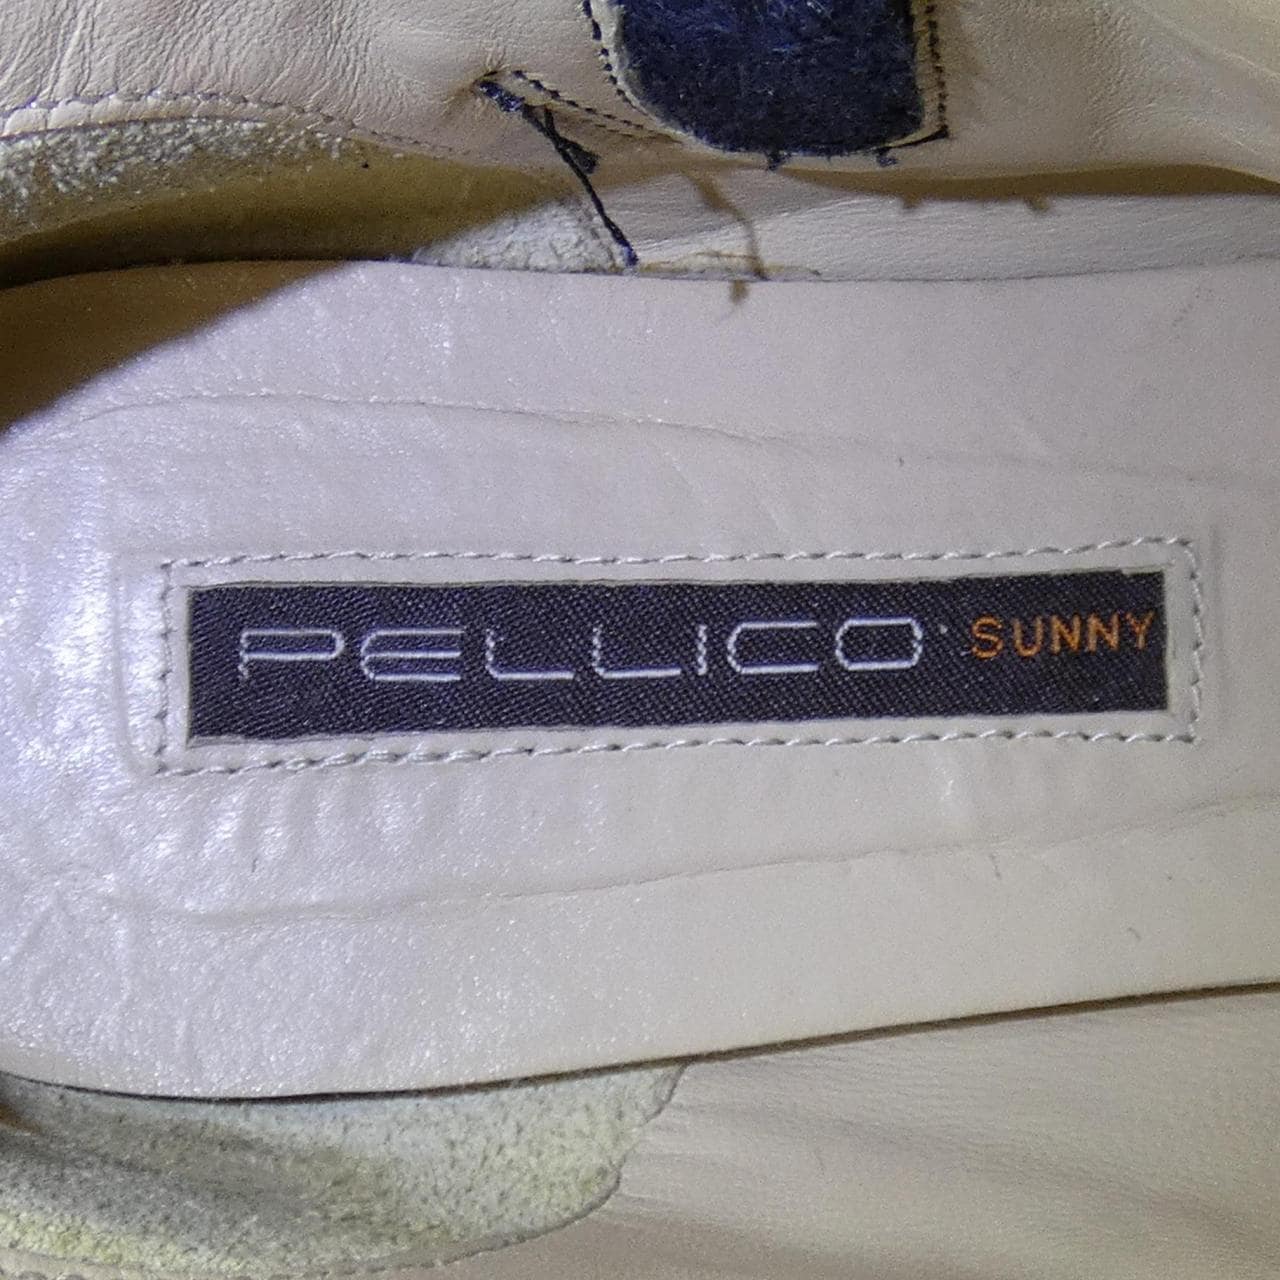 PELLICO SUNNY boots